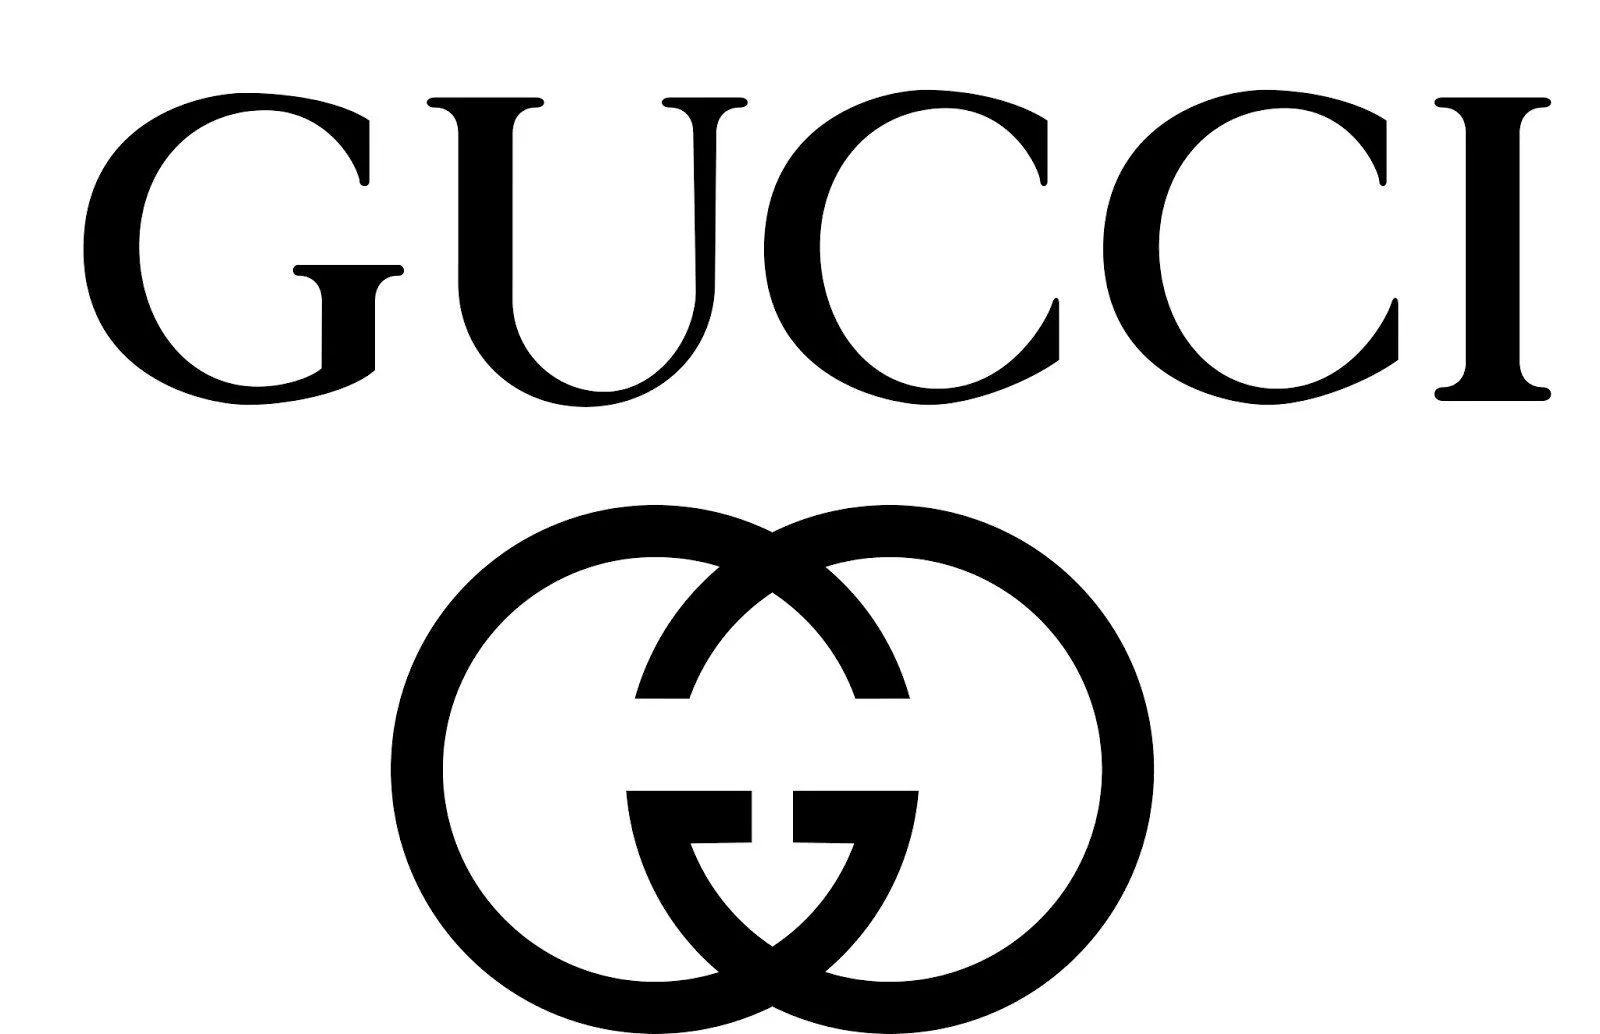 Prada and Gucci – Among the World's Top Fashion Brands ⋆ Escarcha